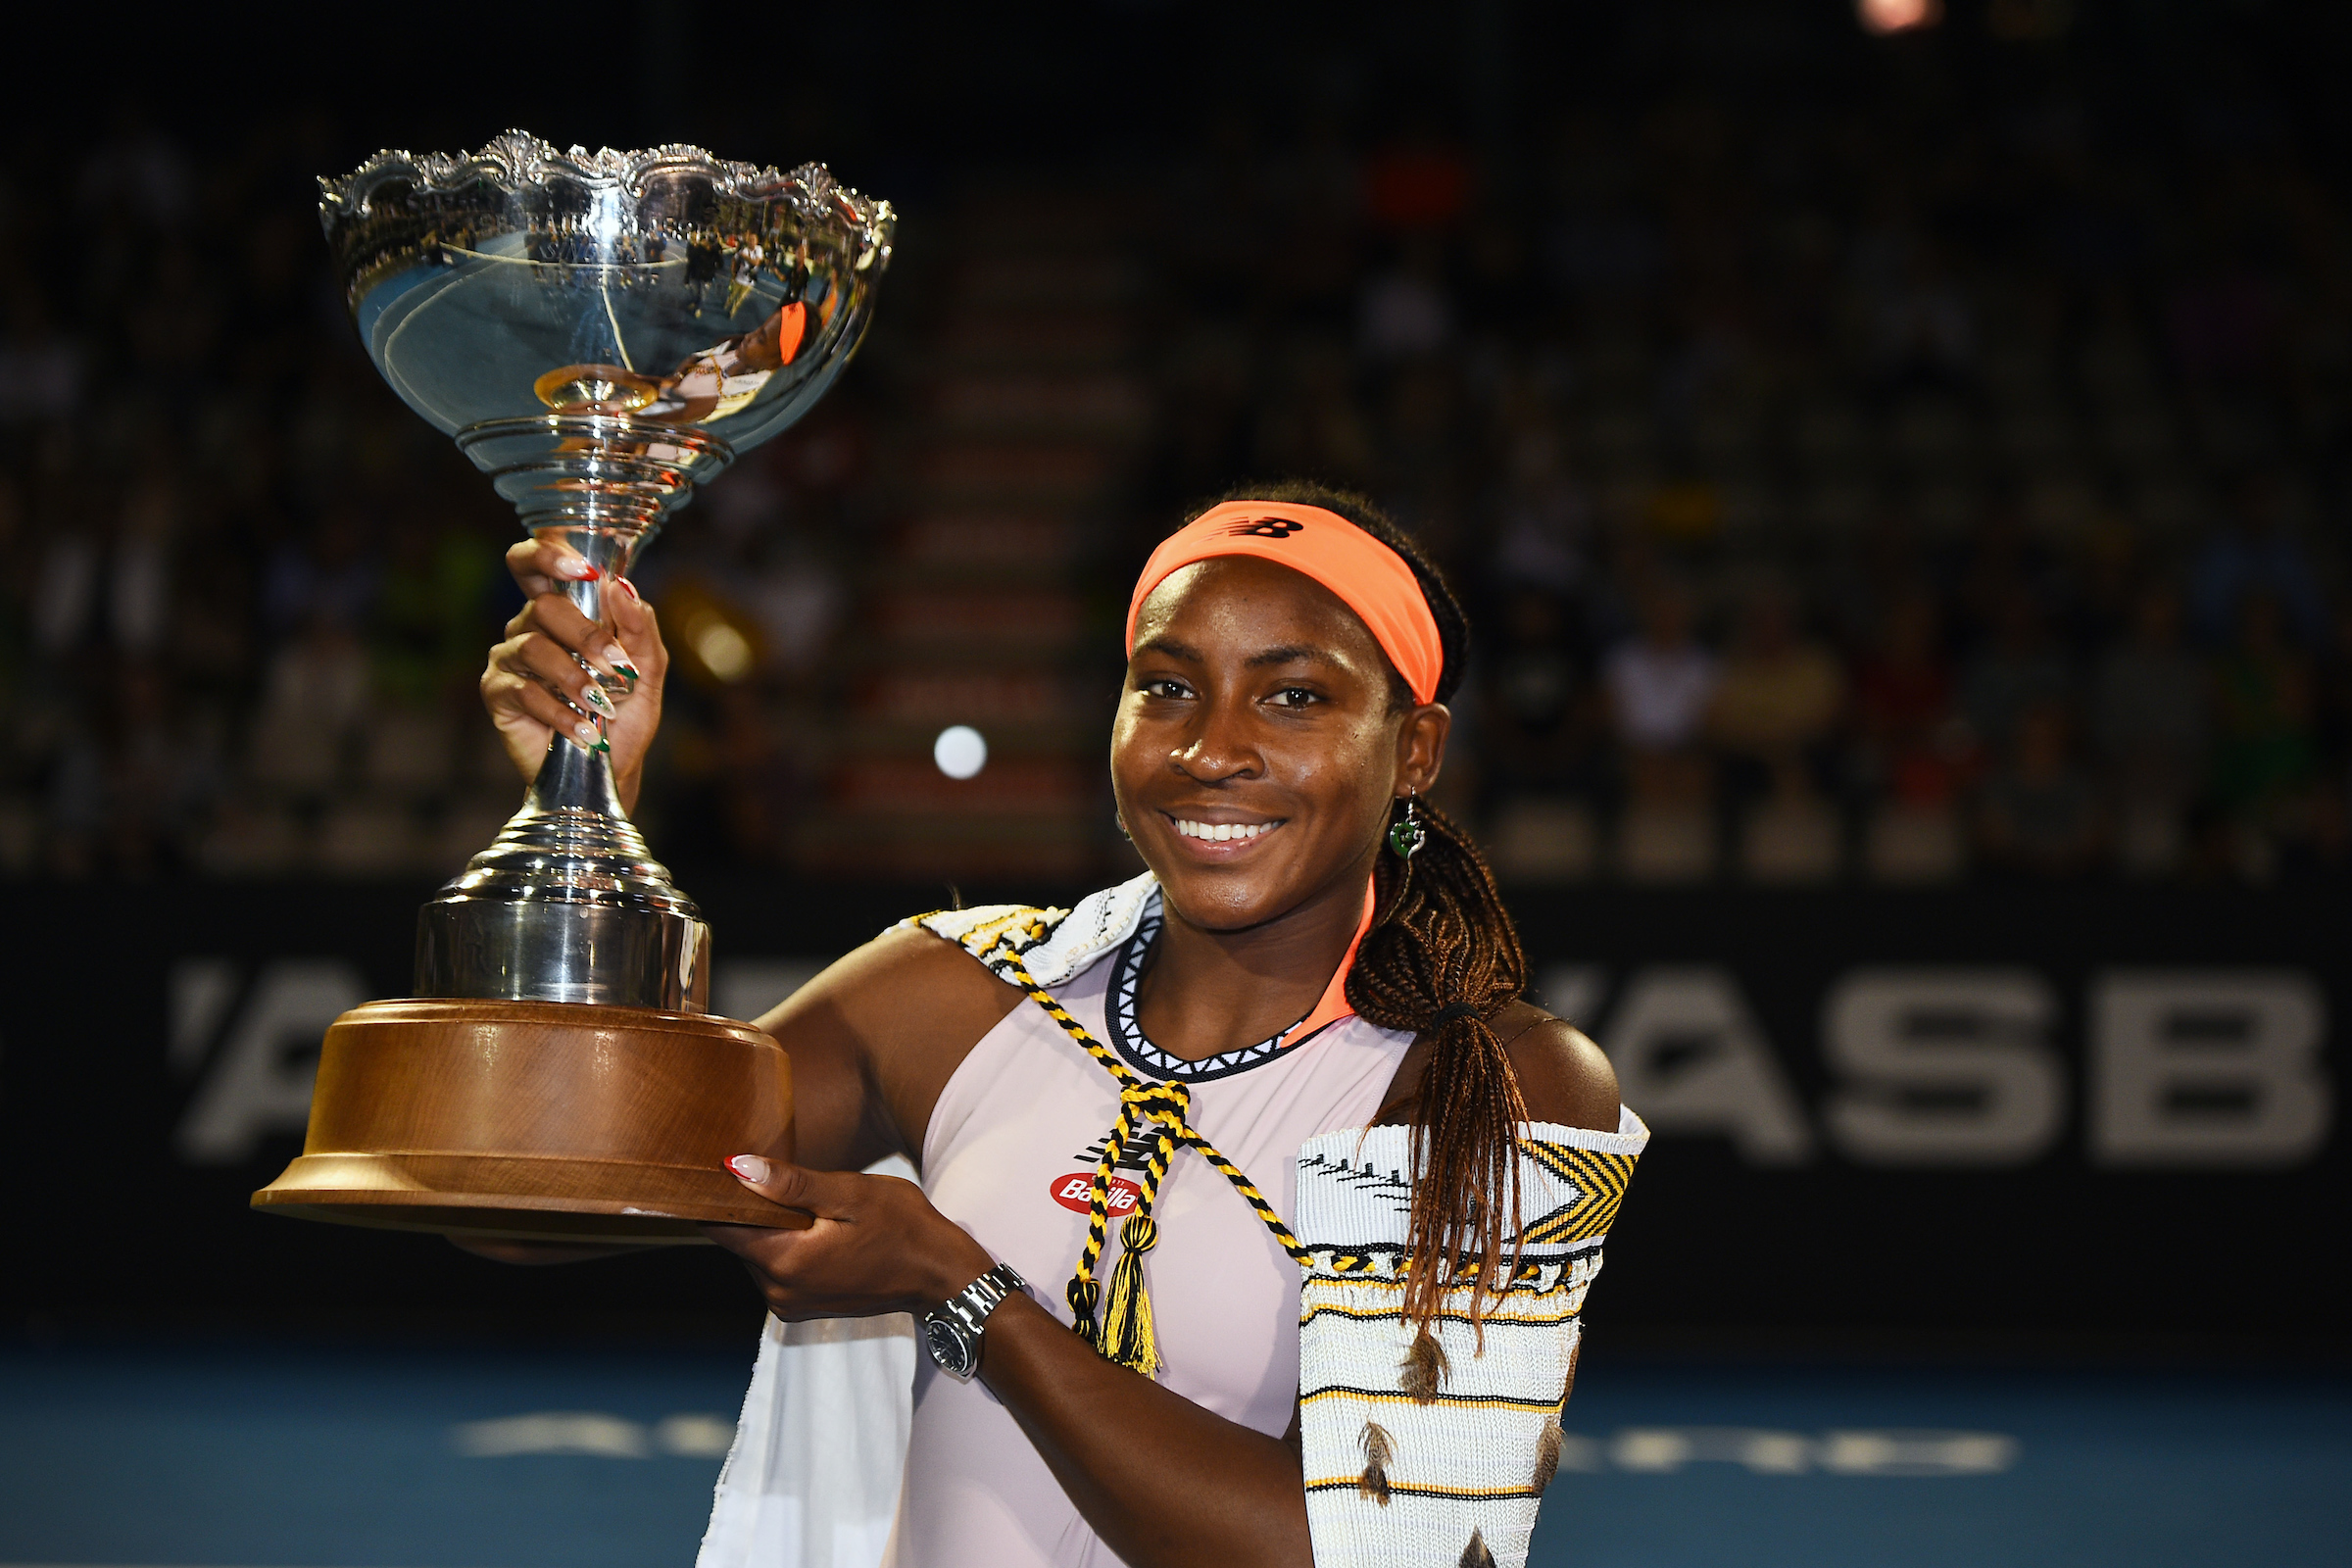 Venus Williams Confirmed for 2014 ASB Classic!